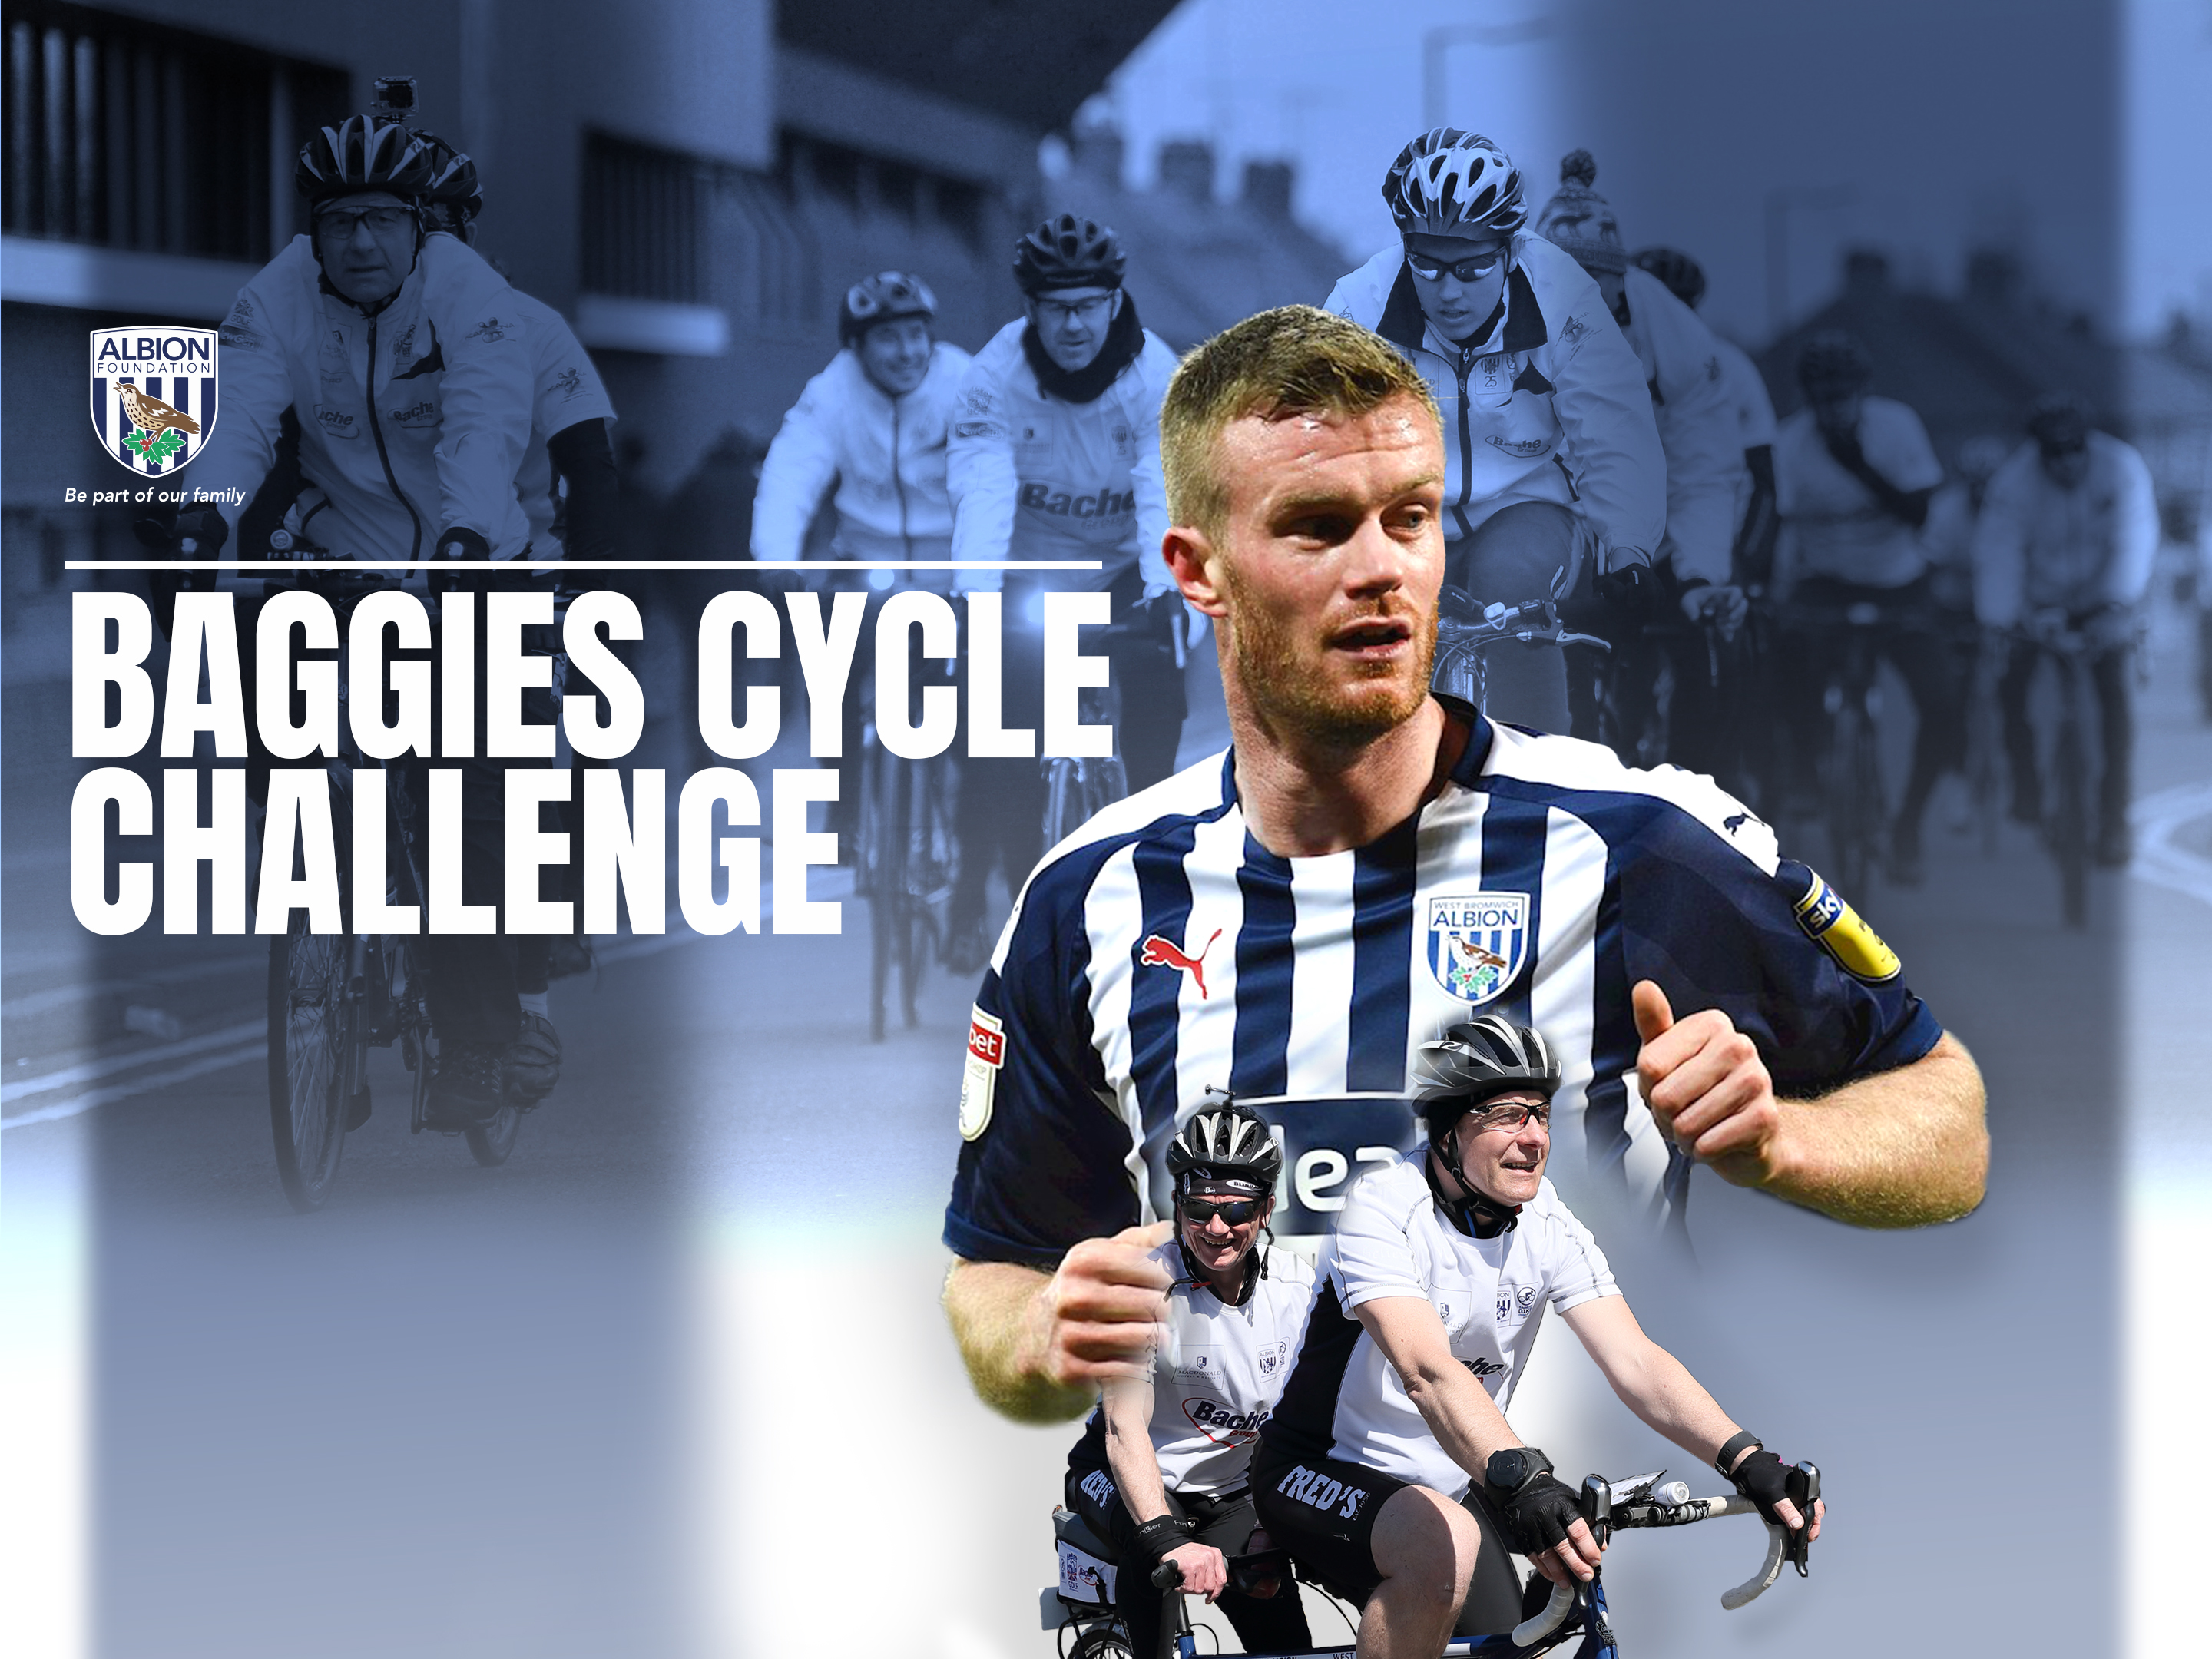 Baggies Cycle Challenge